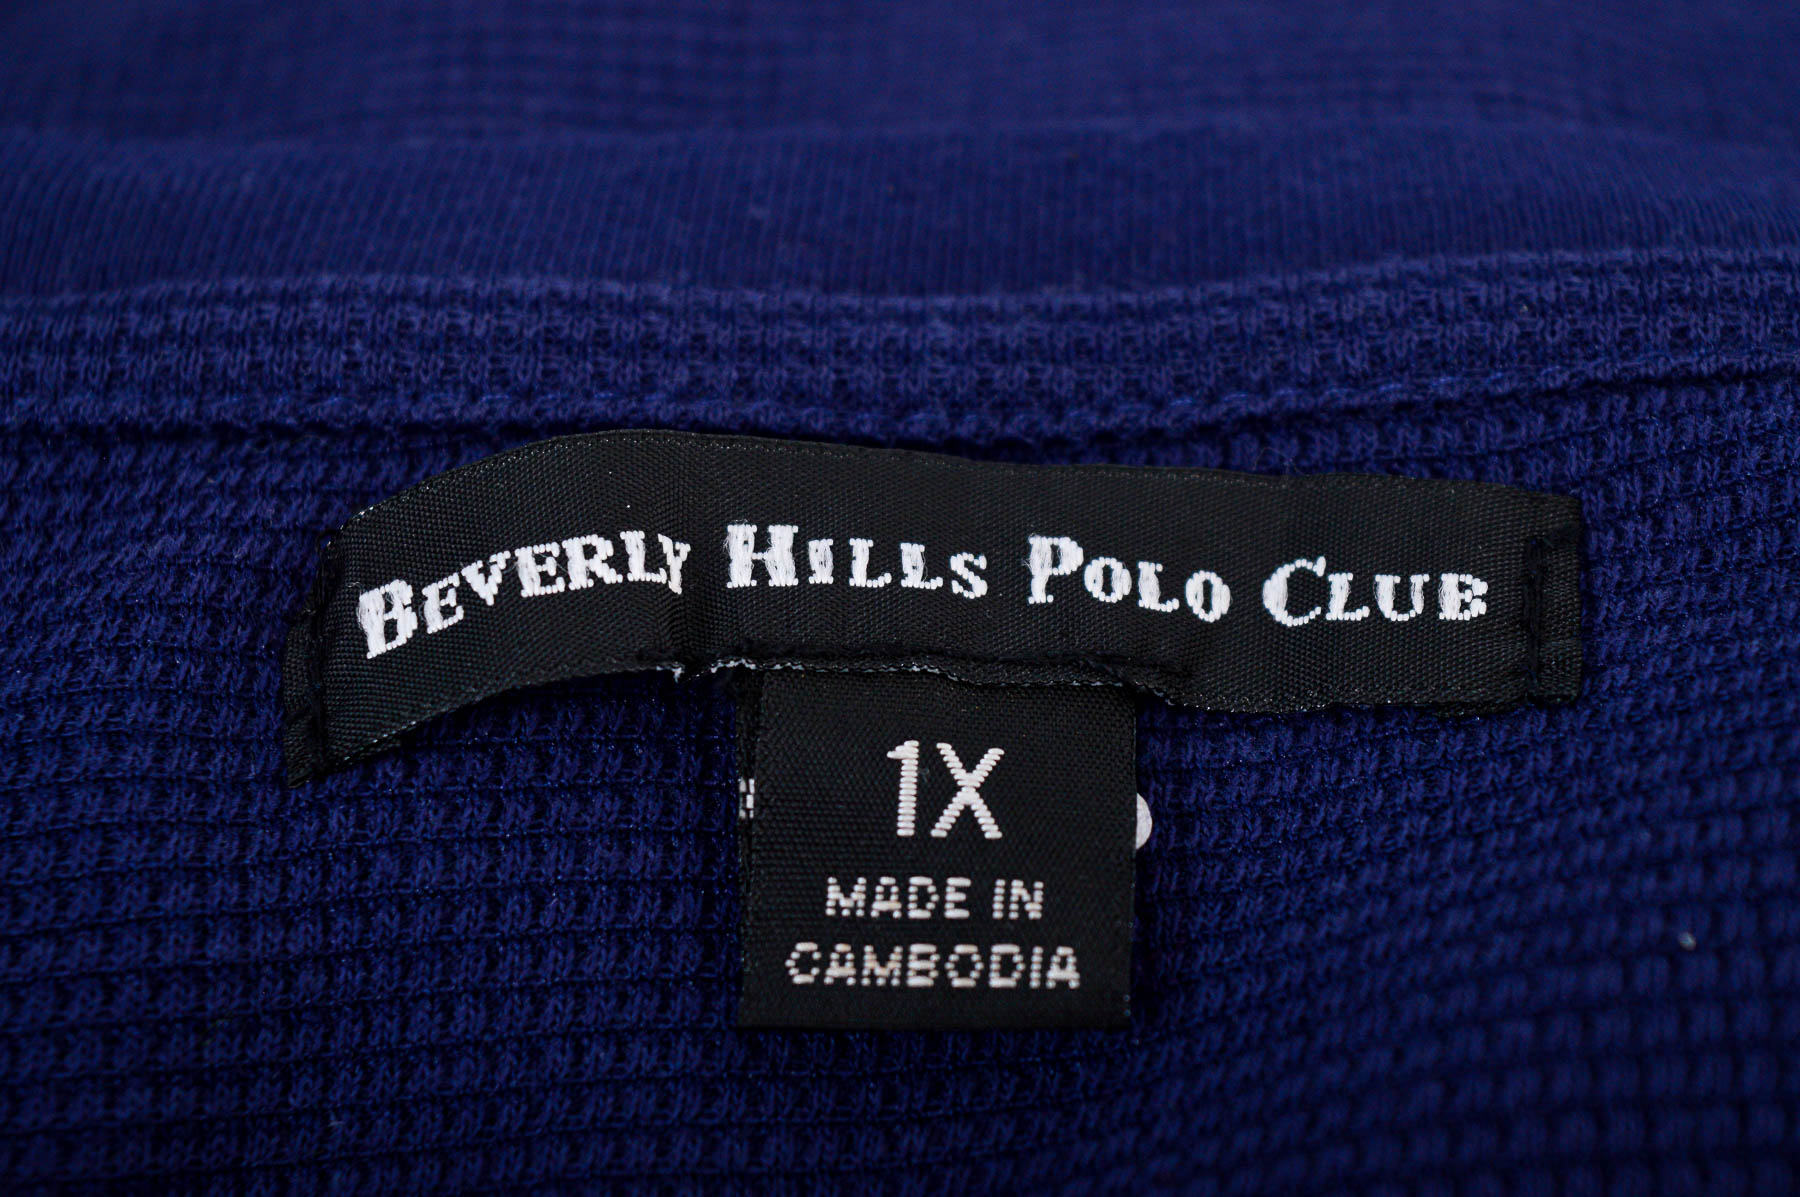 Bluzka damska - Beverly Hills Polo Club - 2